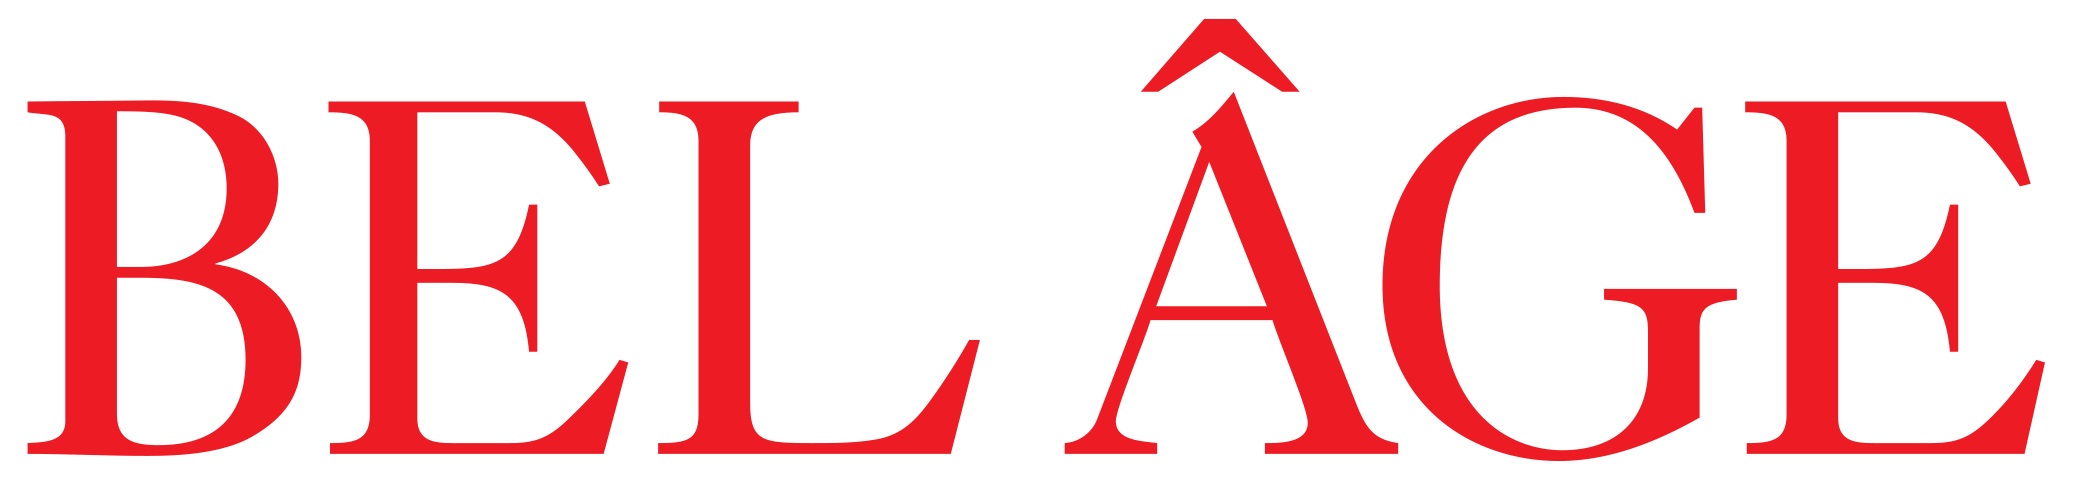 Bel Age Logo Janvier 2020